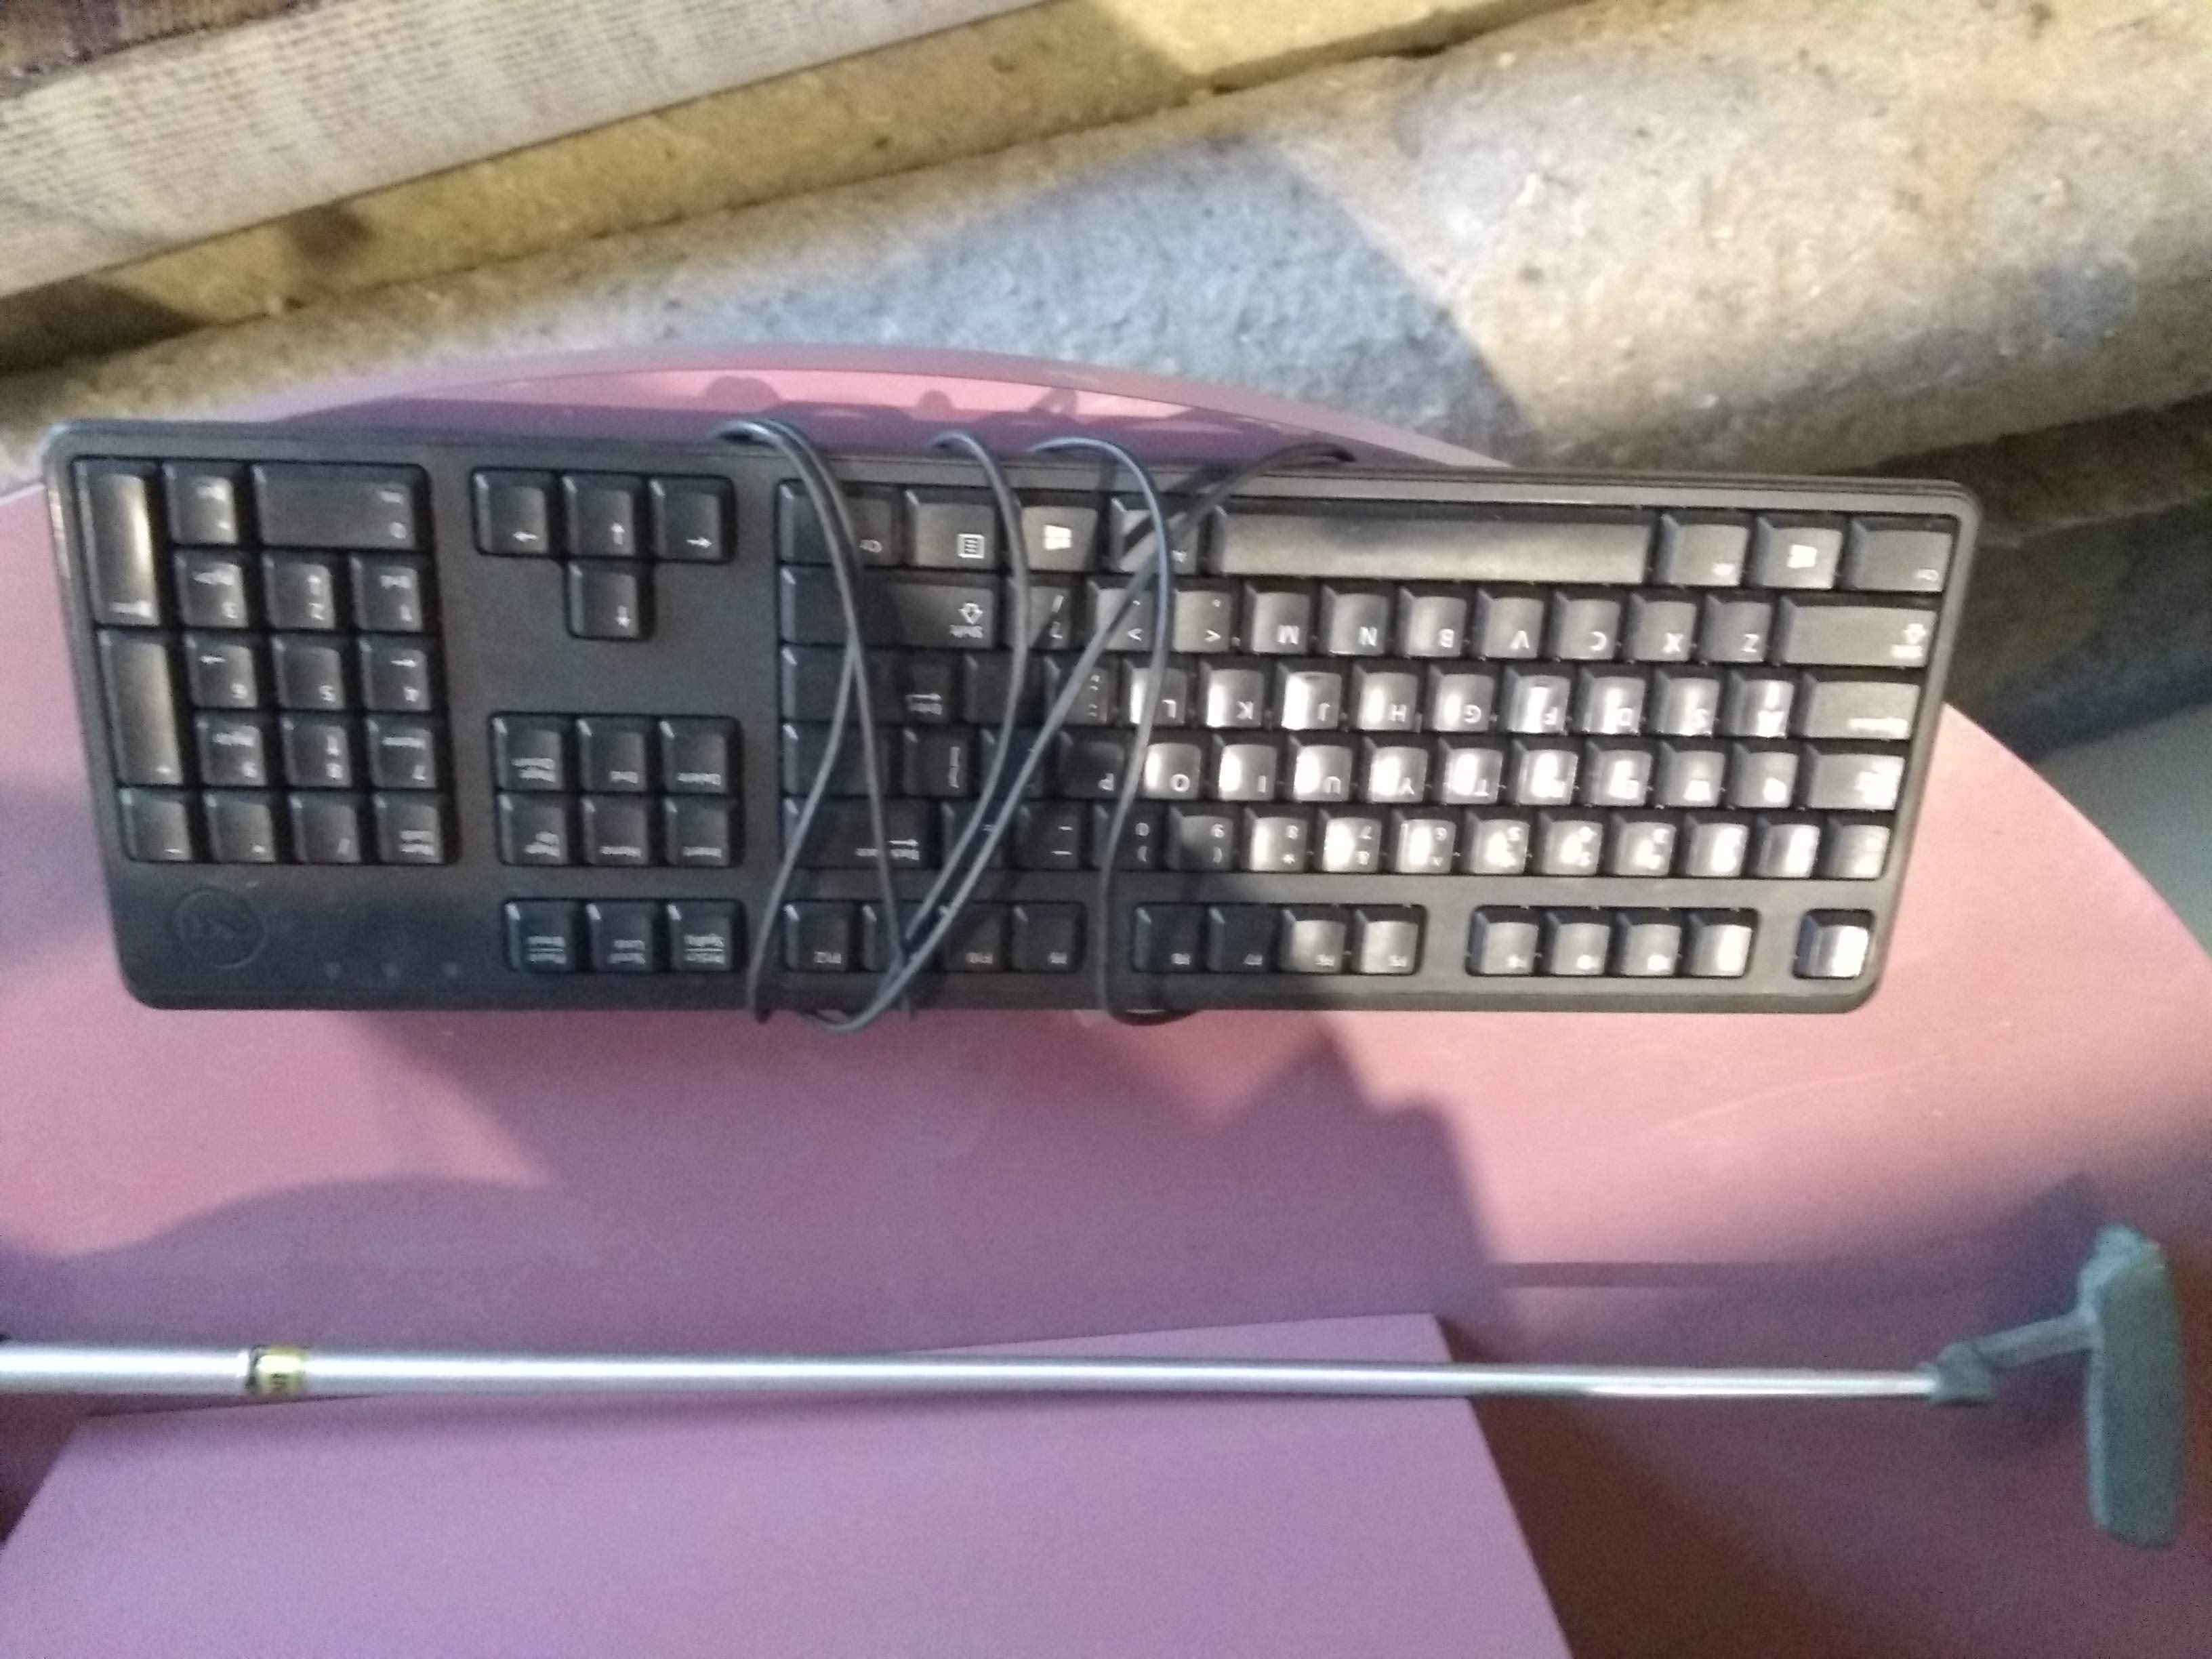 Keyboards, USB